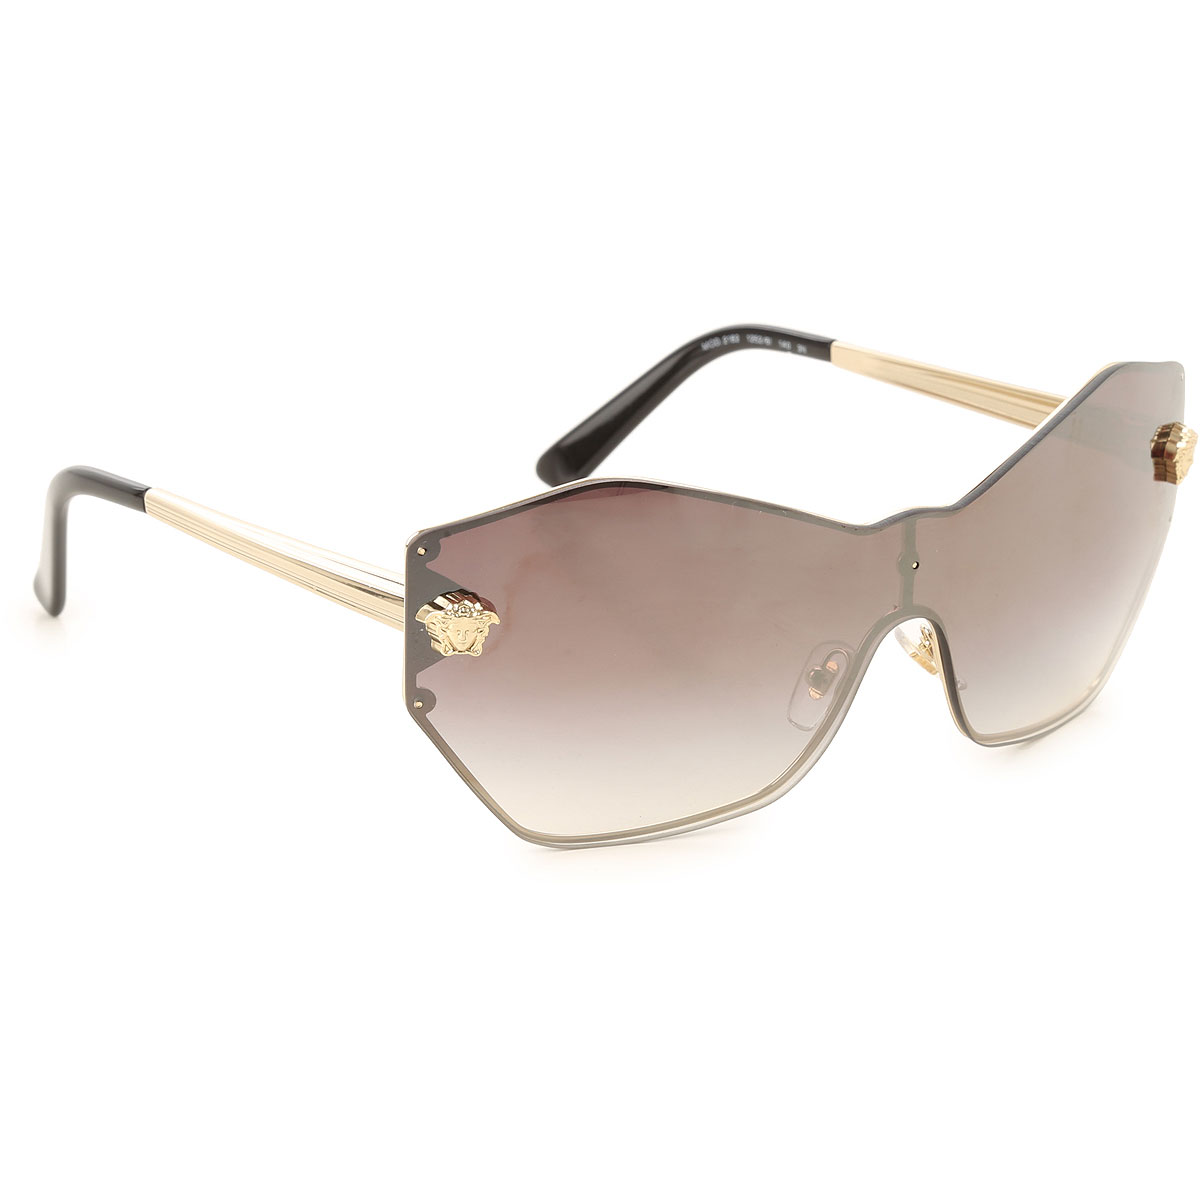 Sunglasses Gianni Versace, Style code: ve2182-1252-6l